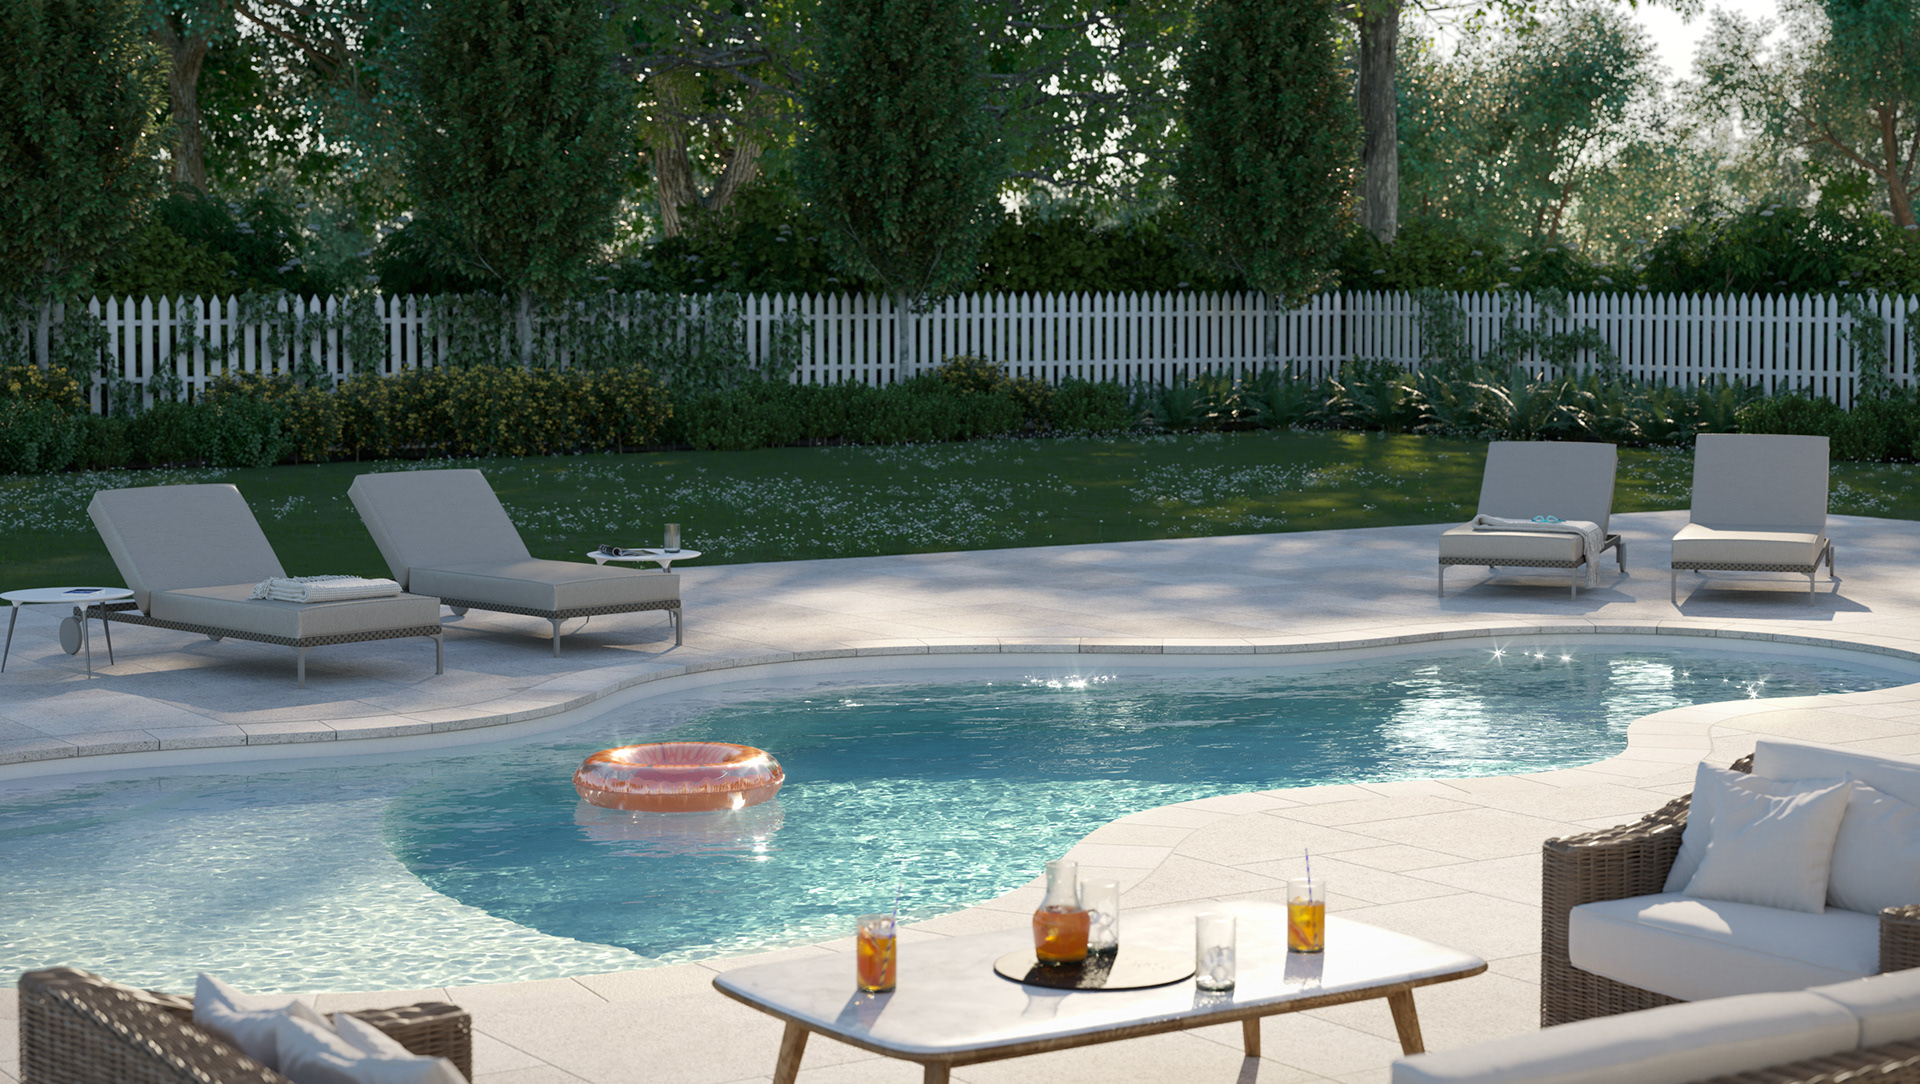 clipse-30 fiberglass pool and splash deck rendering